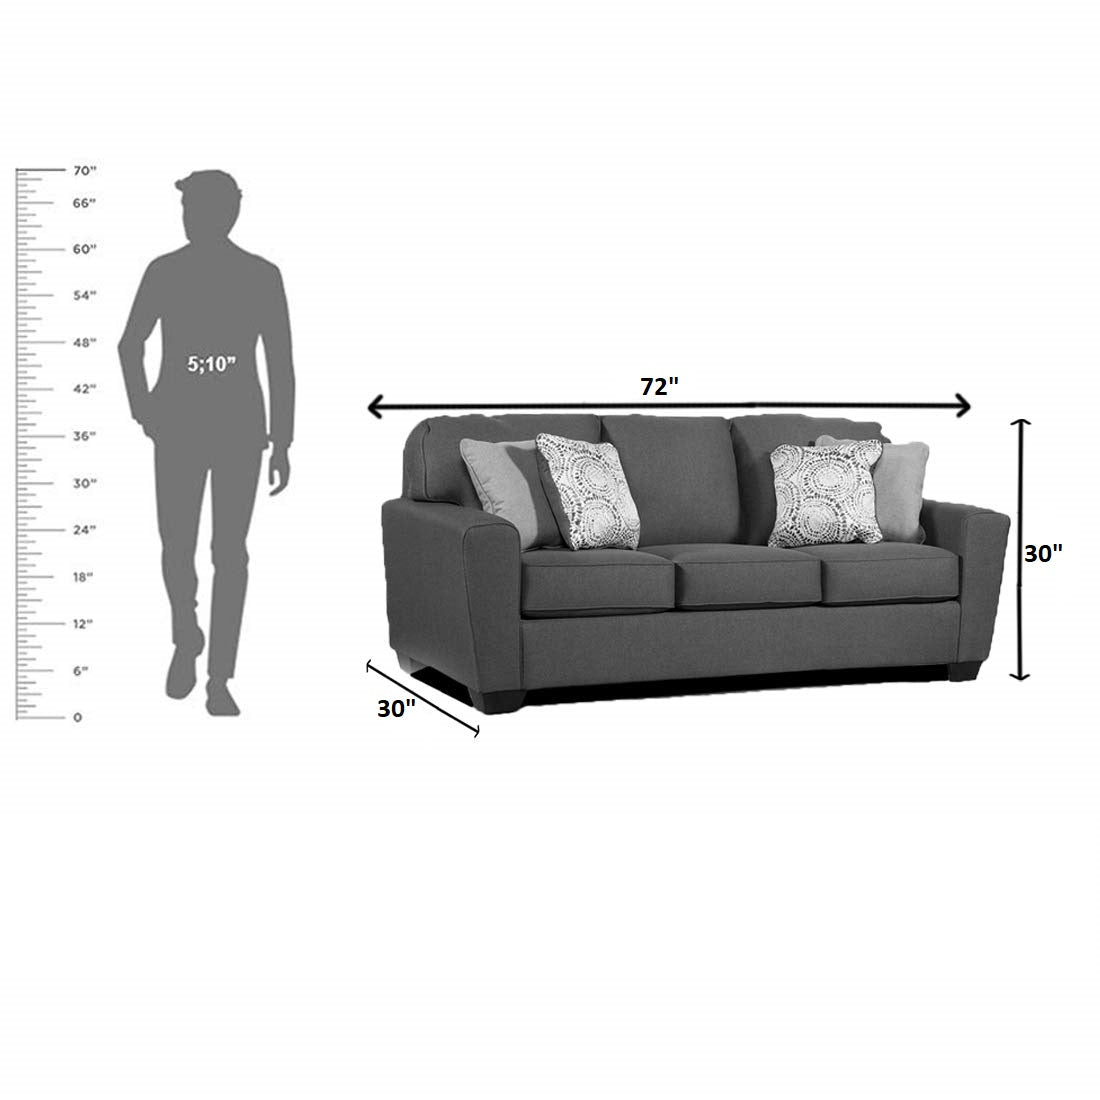 Neve 3 Seater Sofa for Living Room (Dark Grey) - Torque India